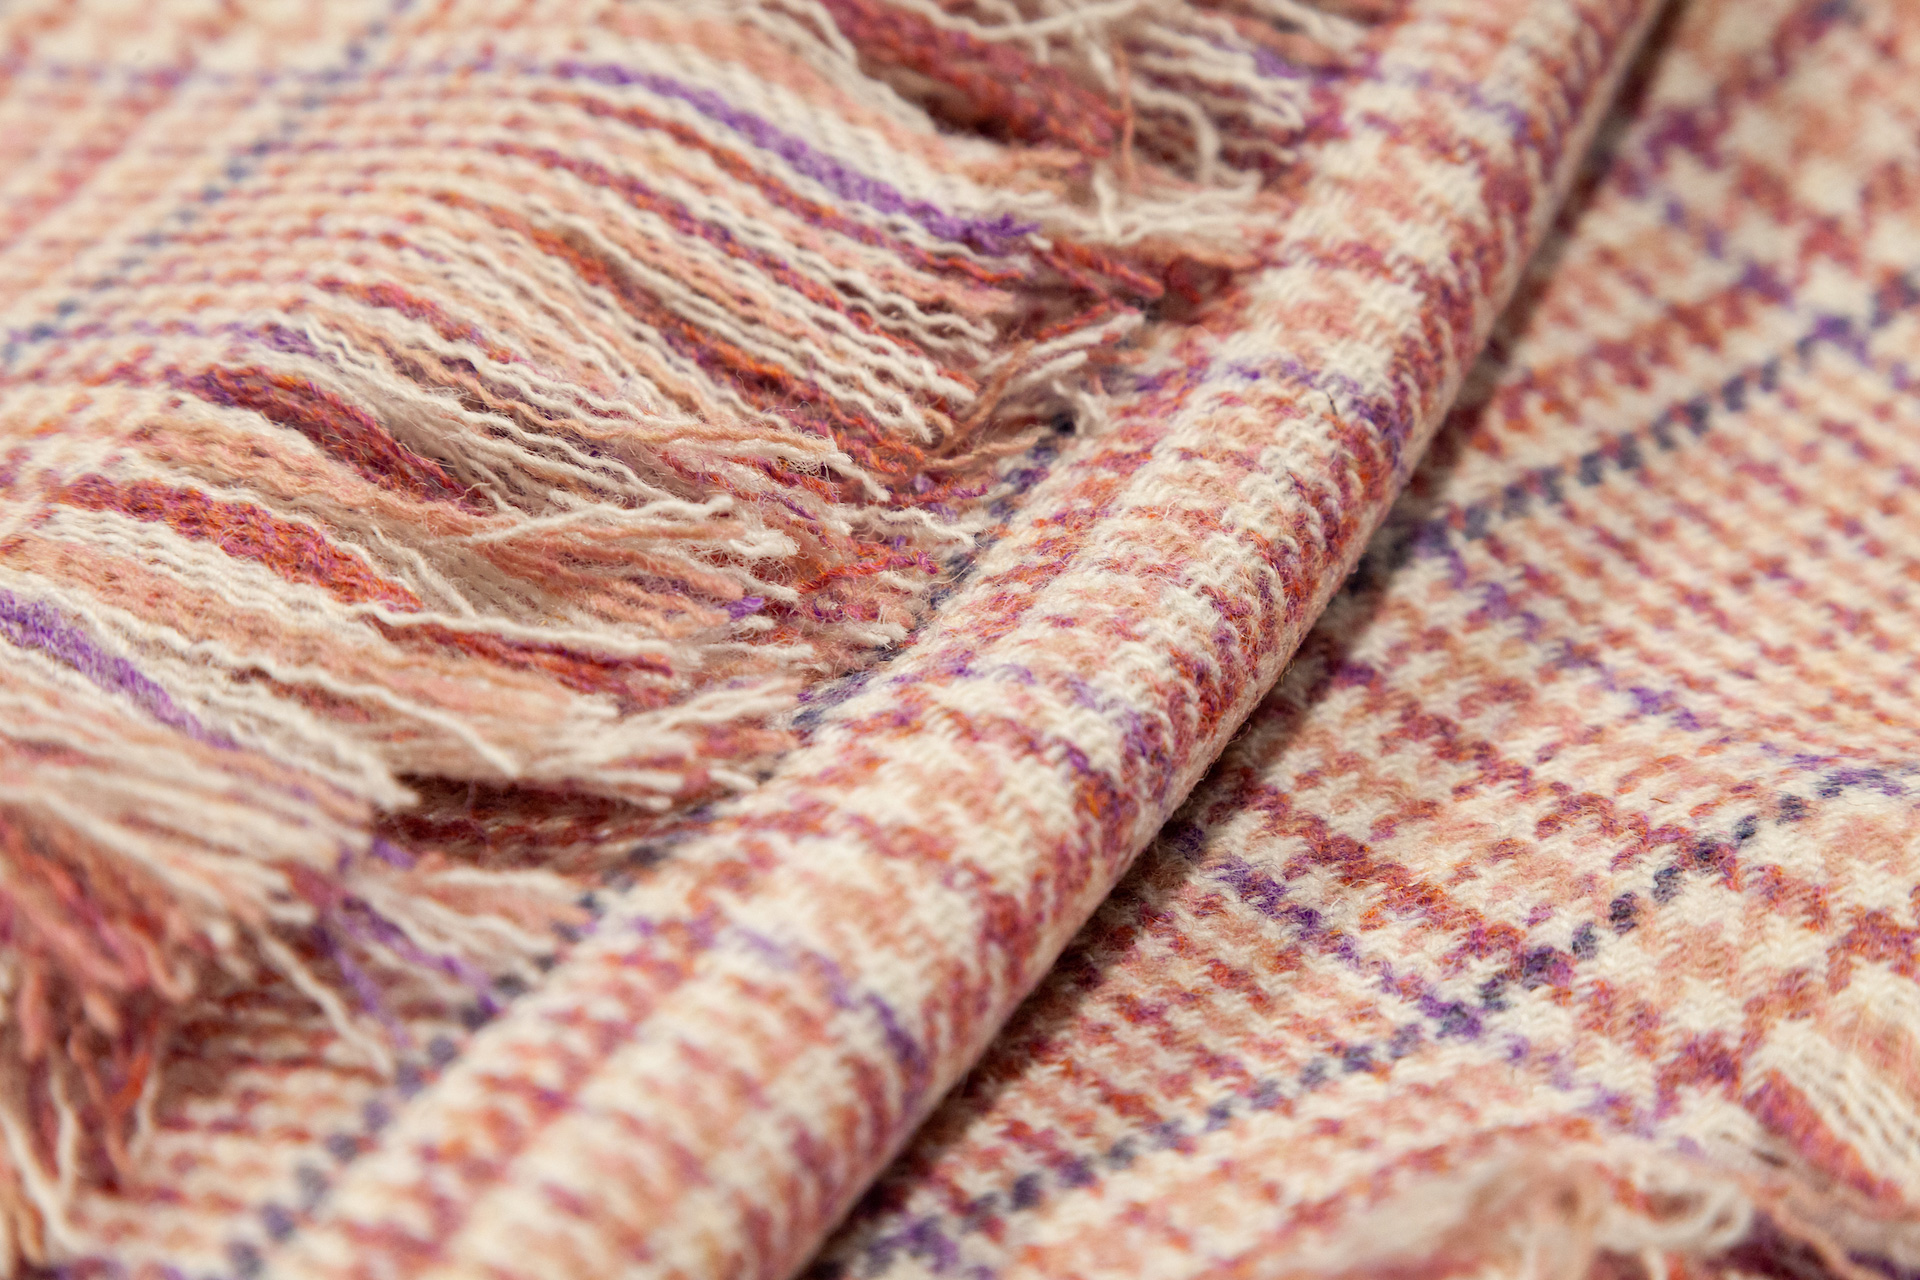 harris tweed authority alison johnston encompass pink houndstooth fabric